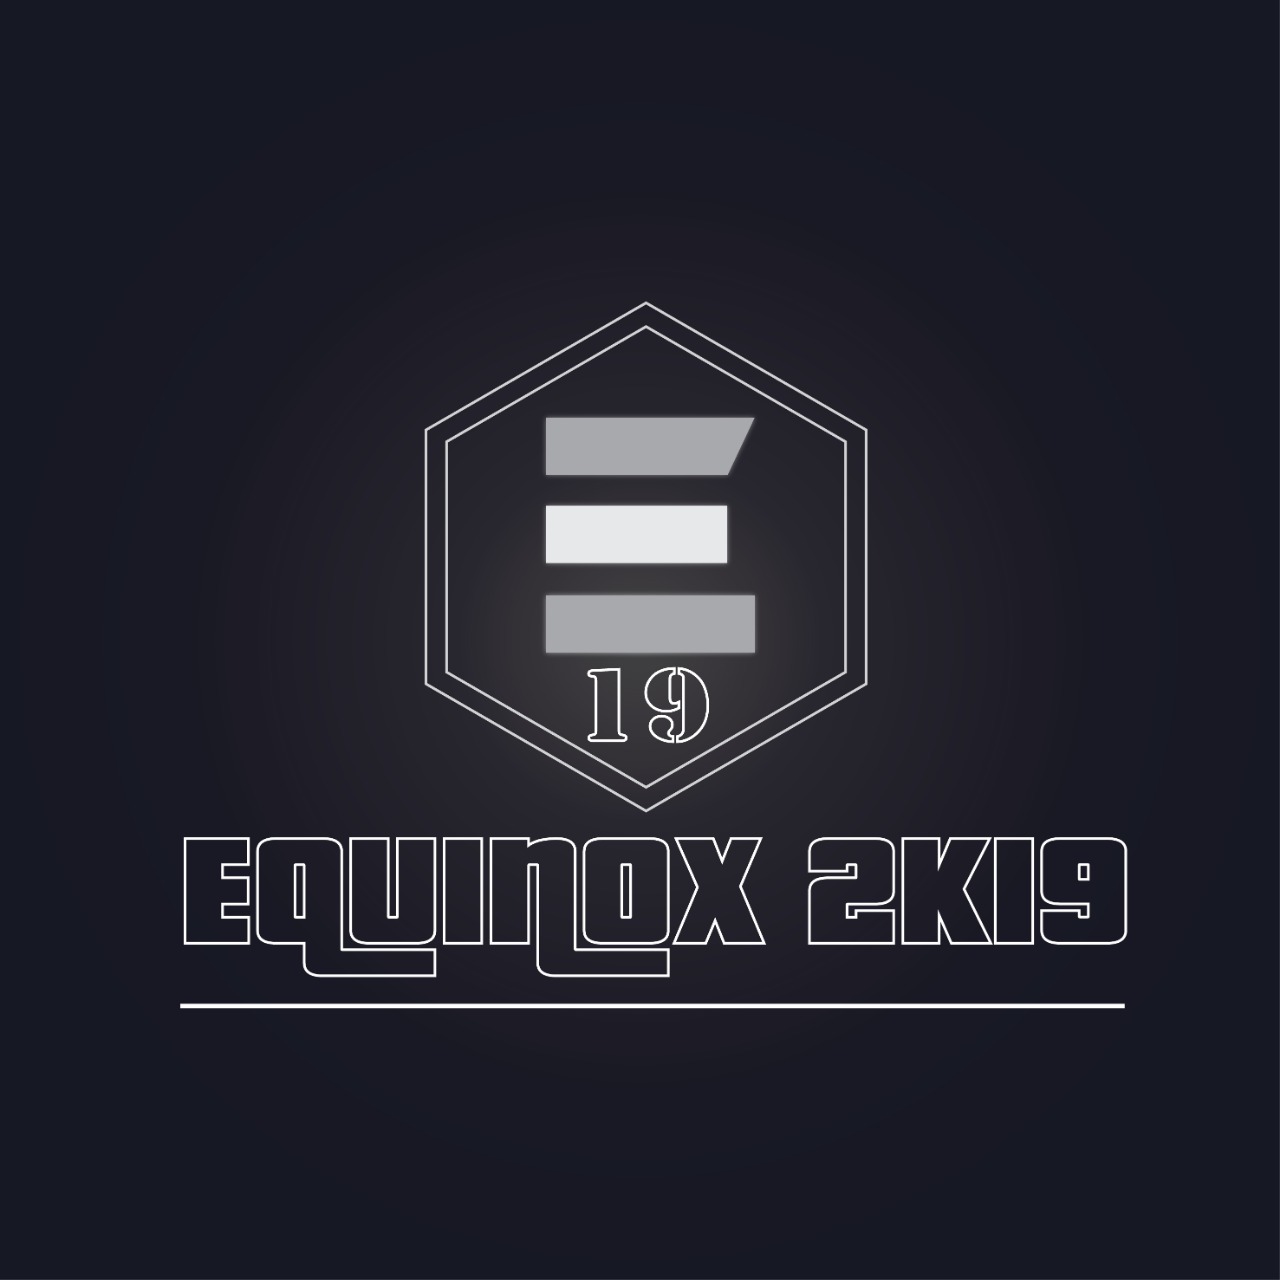 EQUINOX 2019